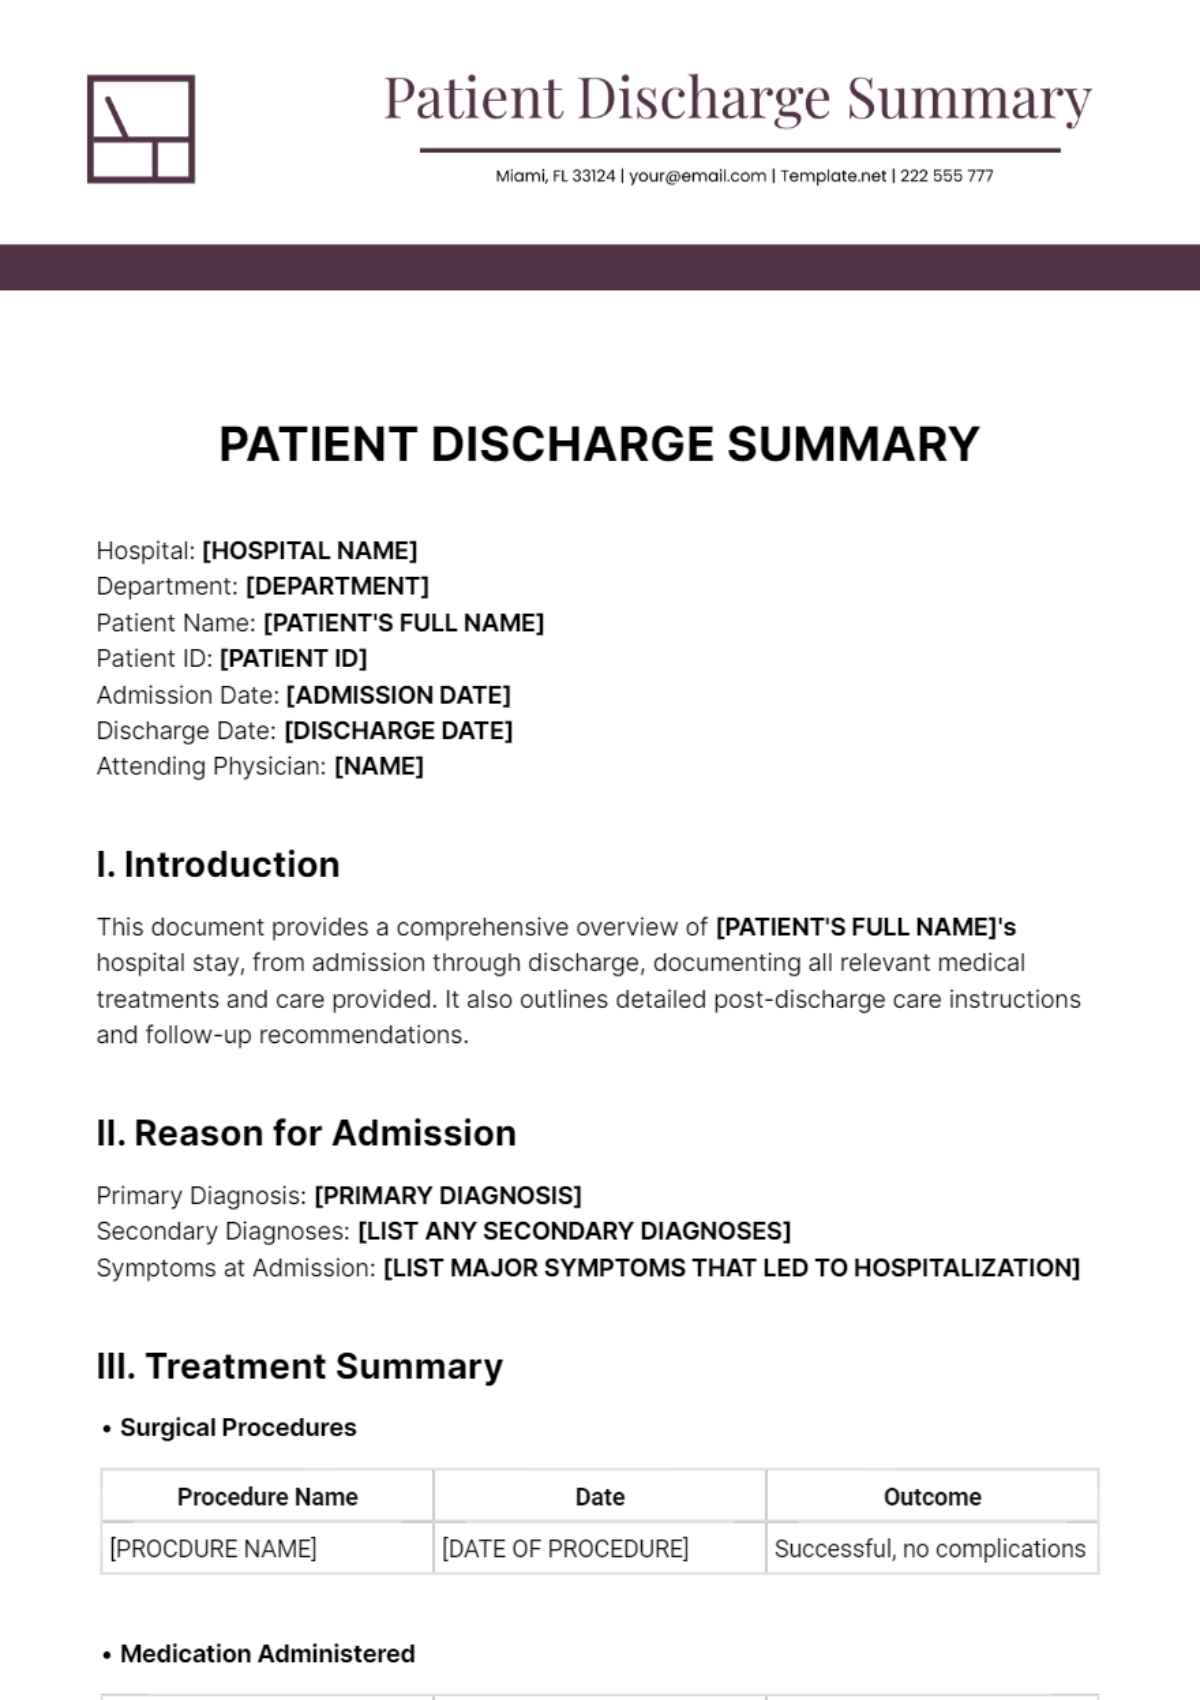 Patient Discharge Summary Template